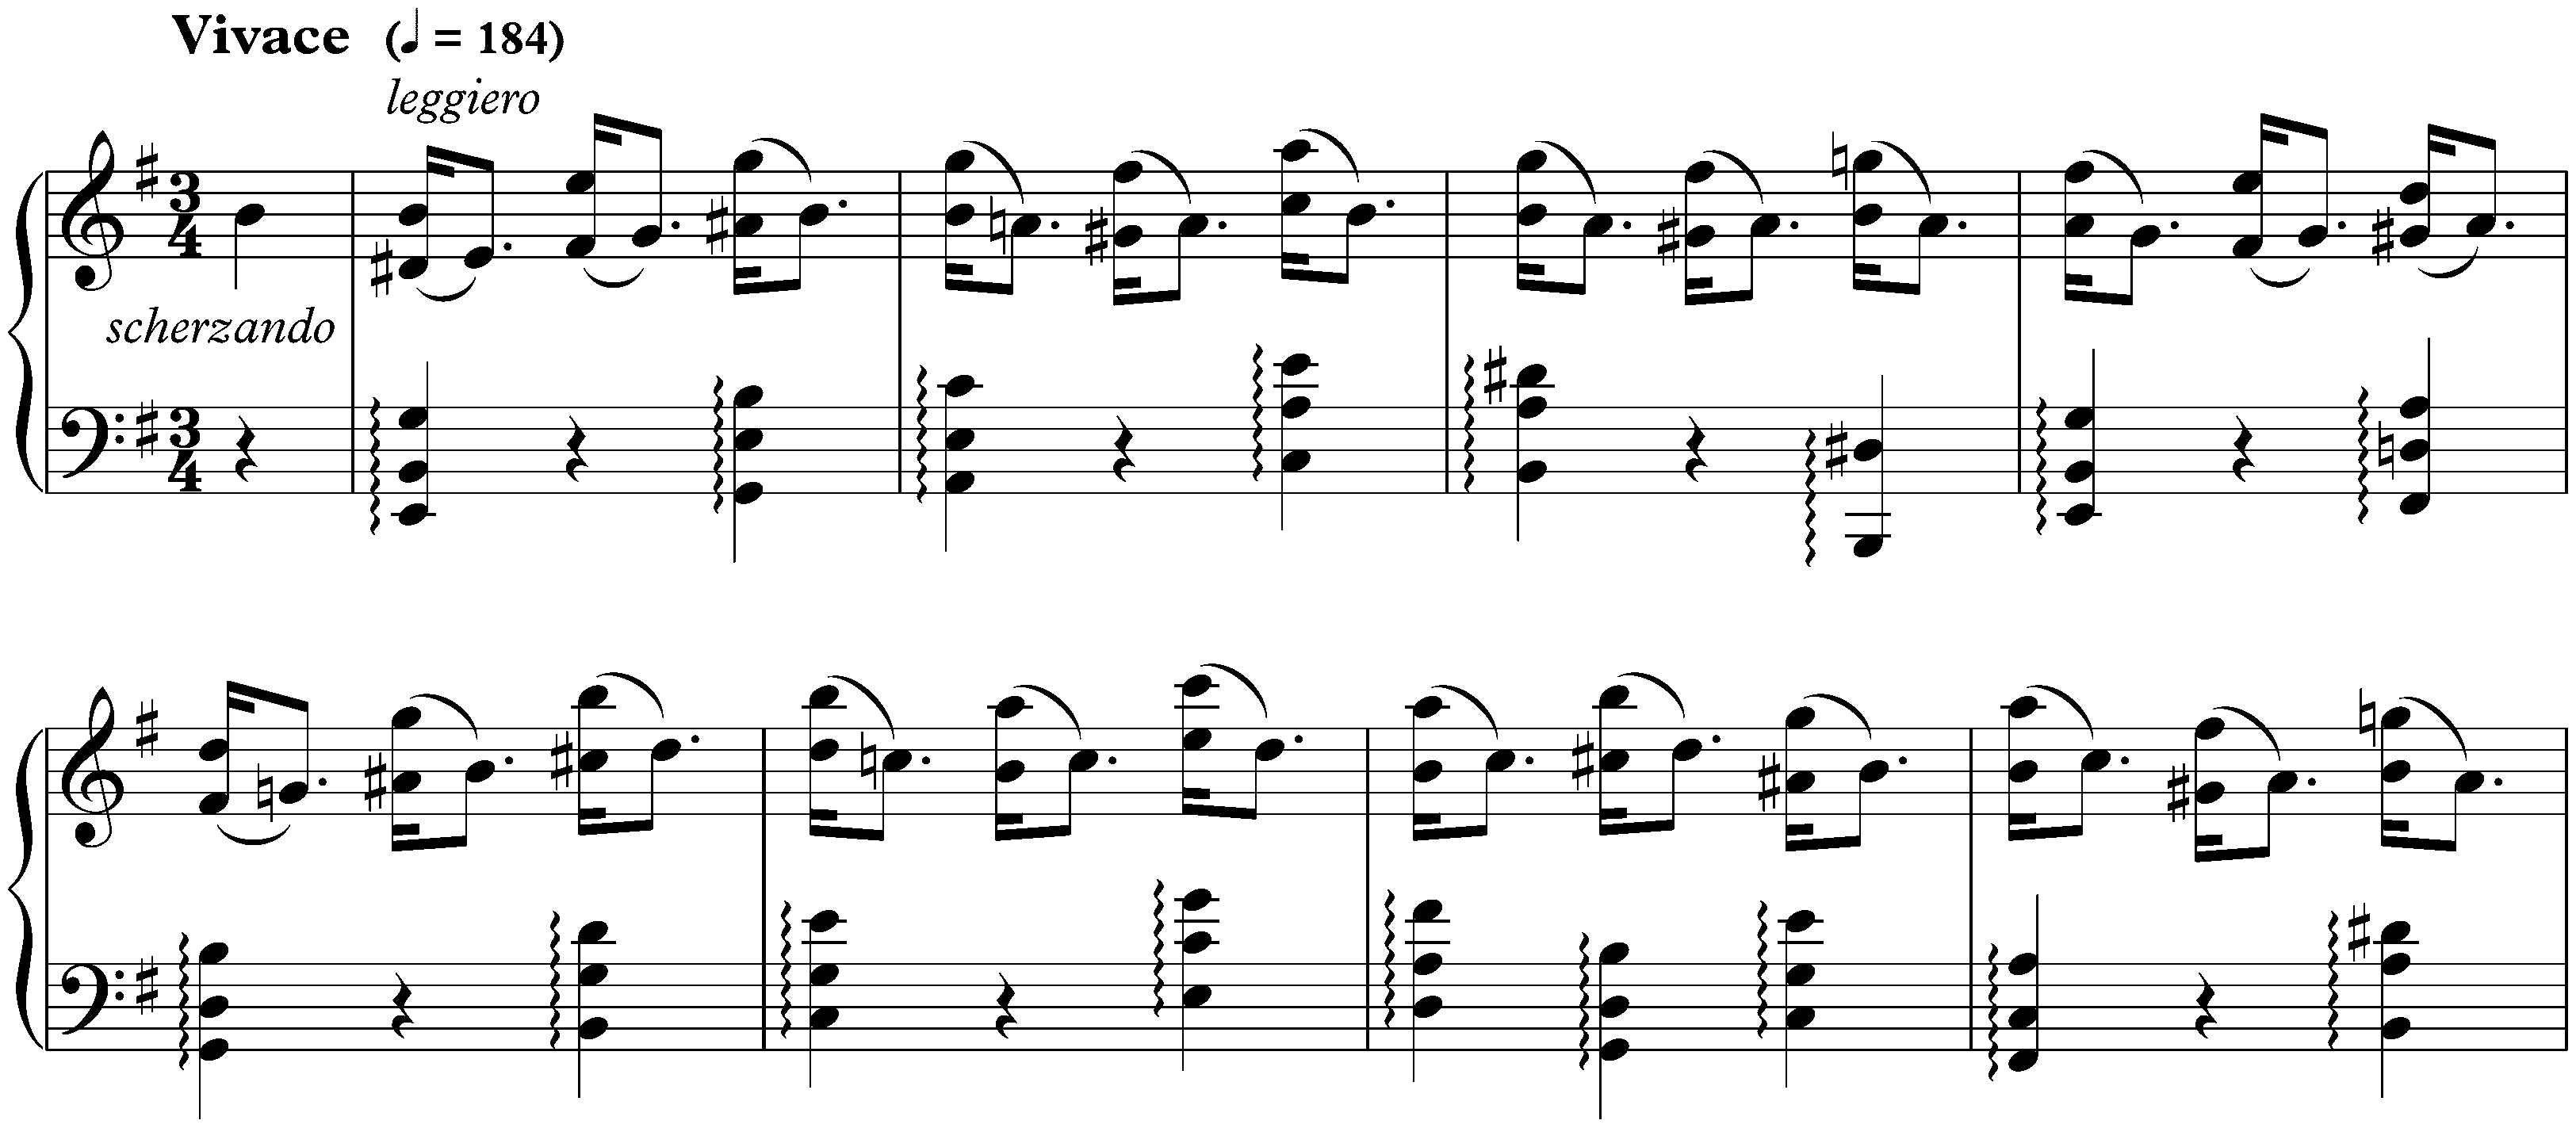 Twelve Études, op. 25; 5. E minor